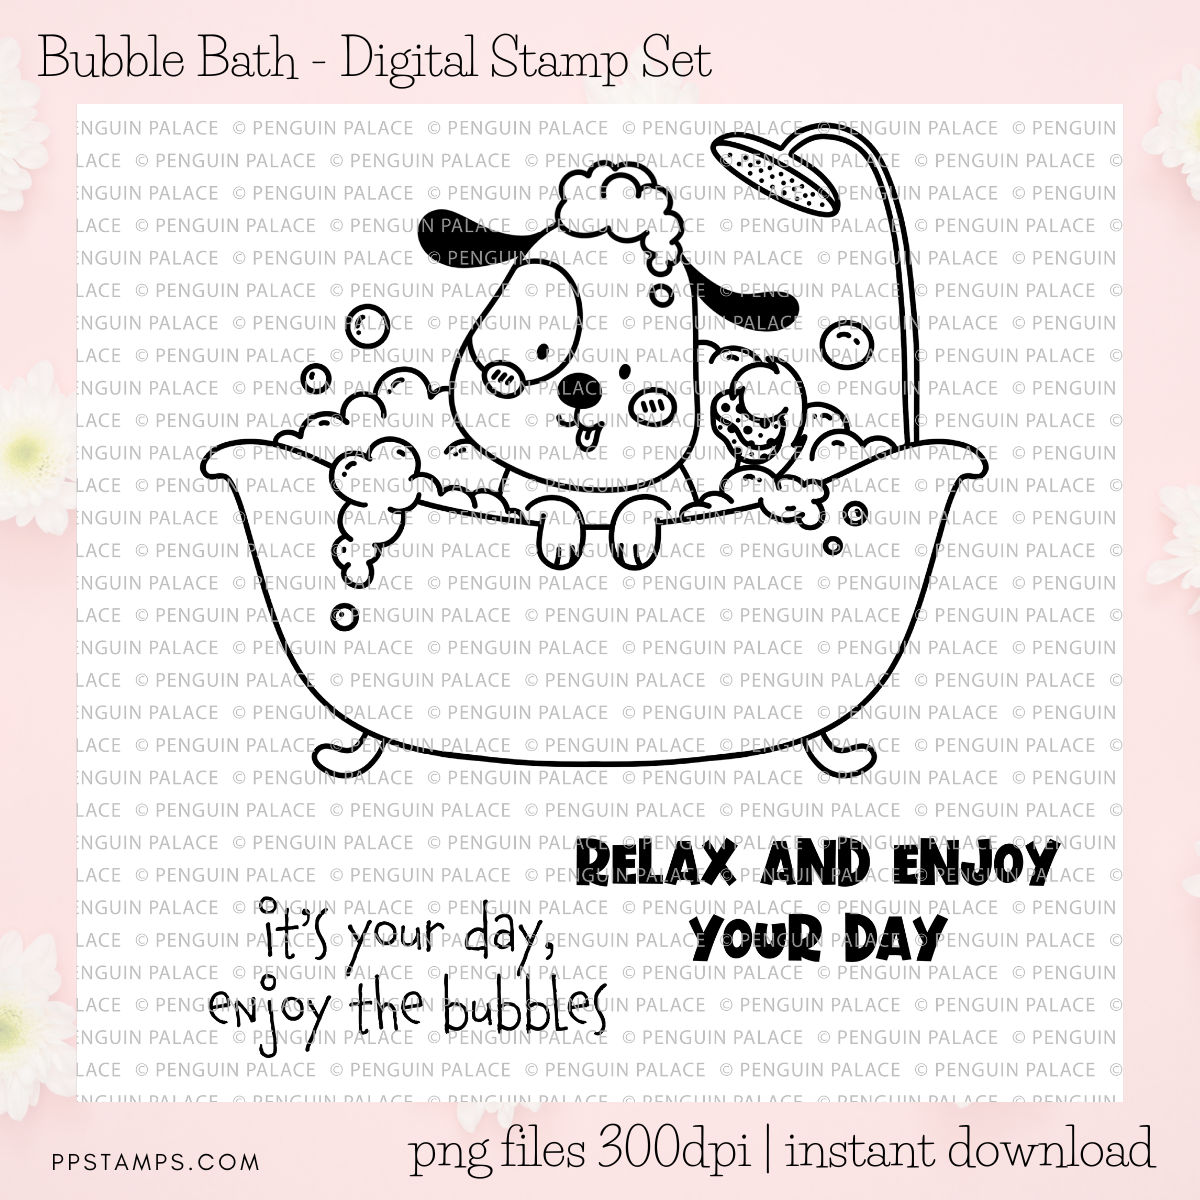 Bubble Bath - Digital Stamp